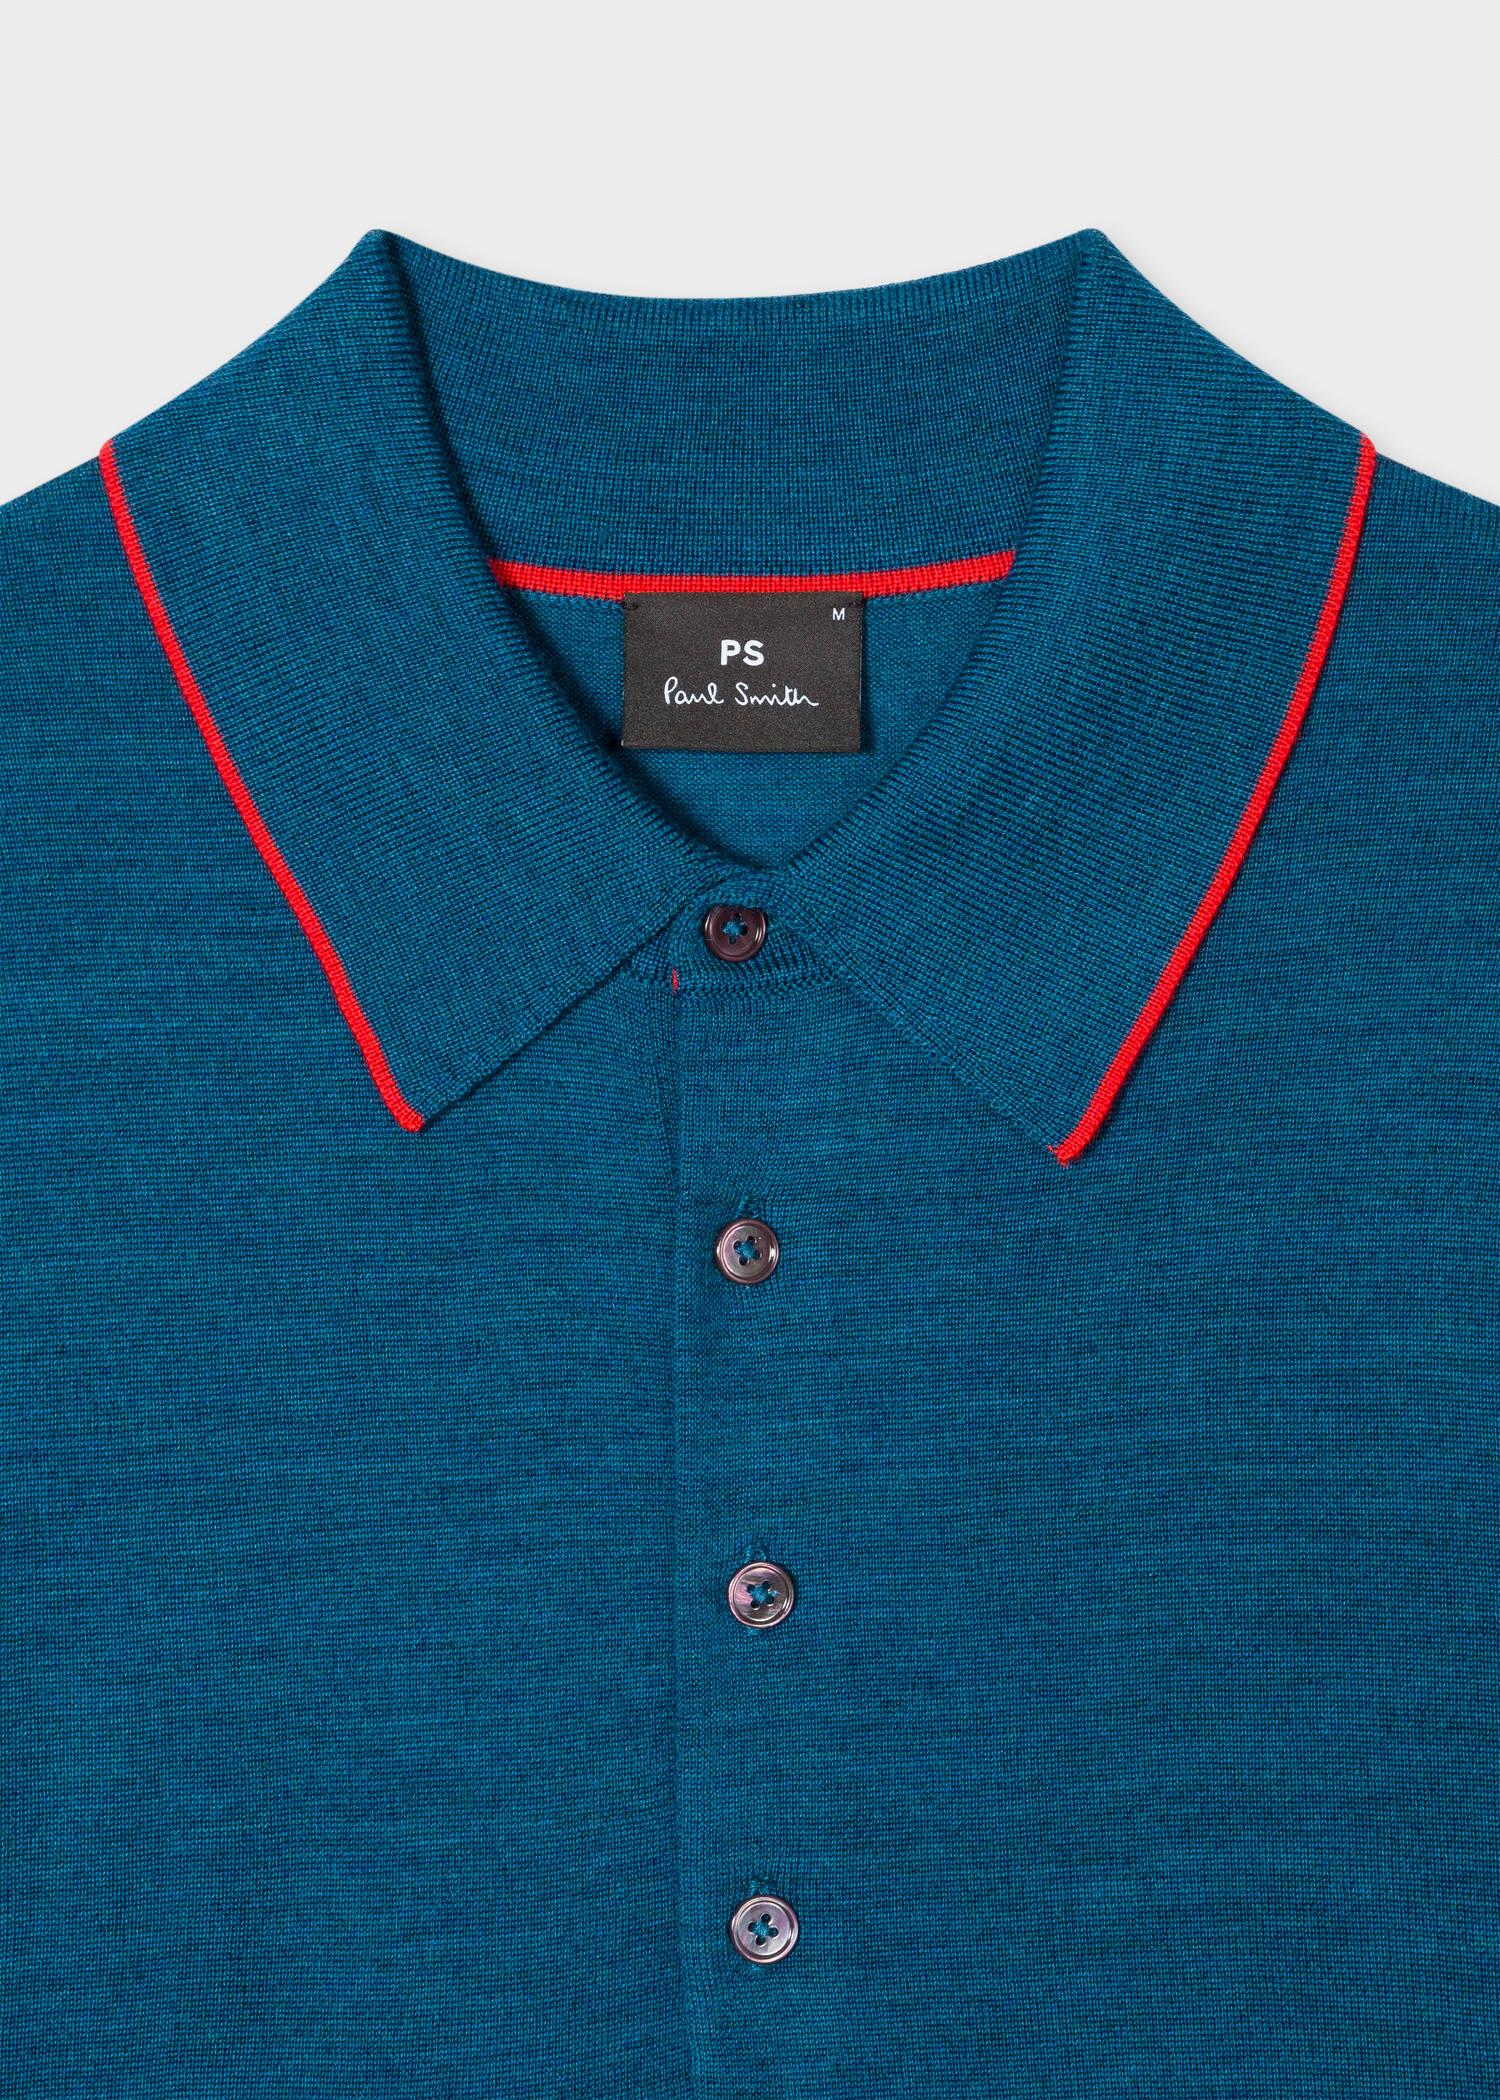 Detail view - Men's Blue Marl Merino Wool Polo Shirt Paul Smith